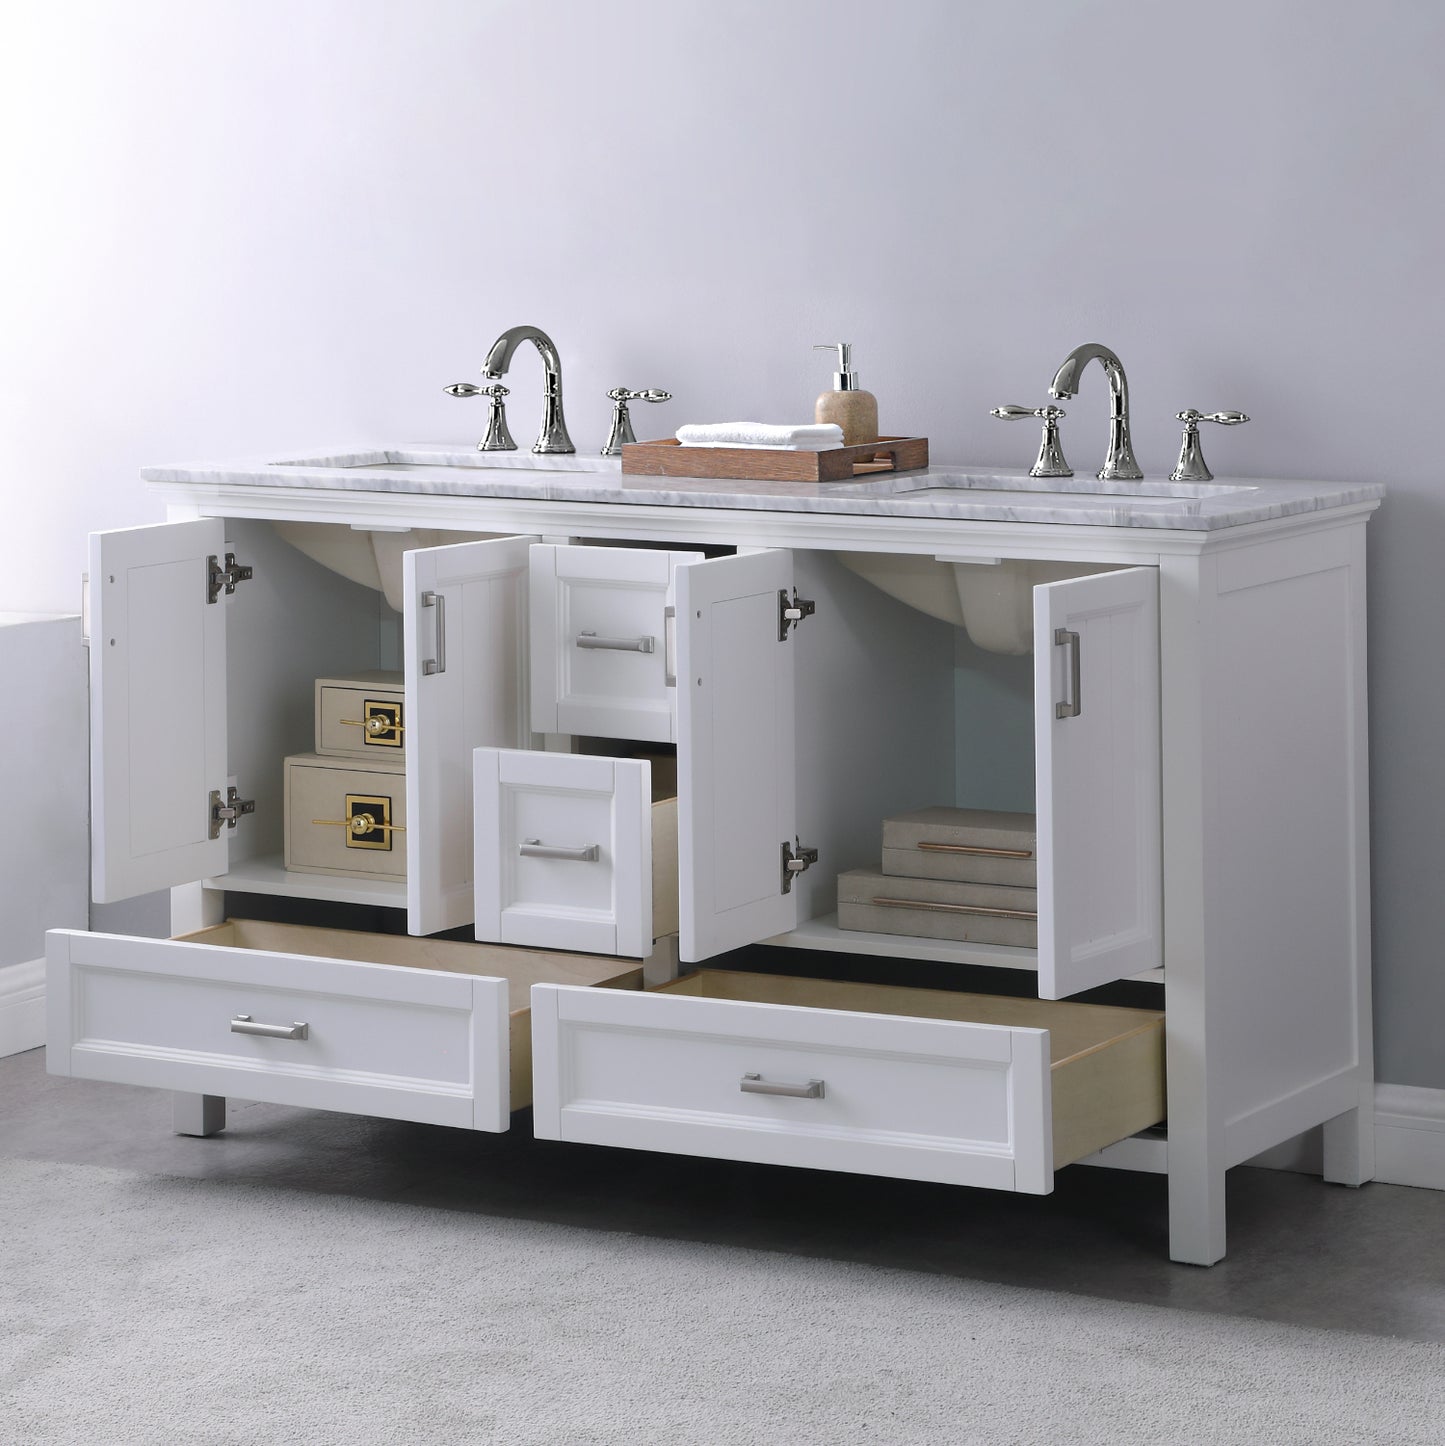 Isla Double Bathroom Vanity Set in Gray and Carrara White Marble Countertop